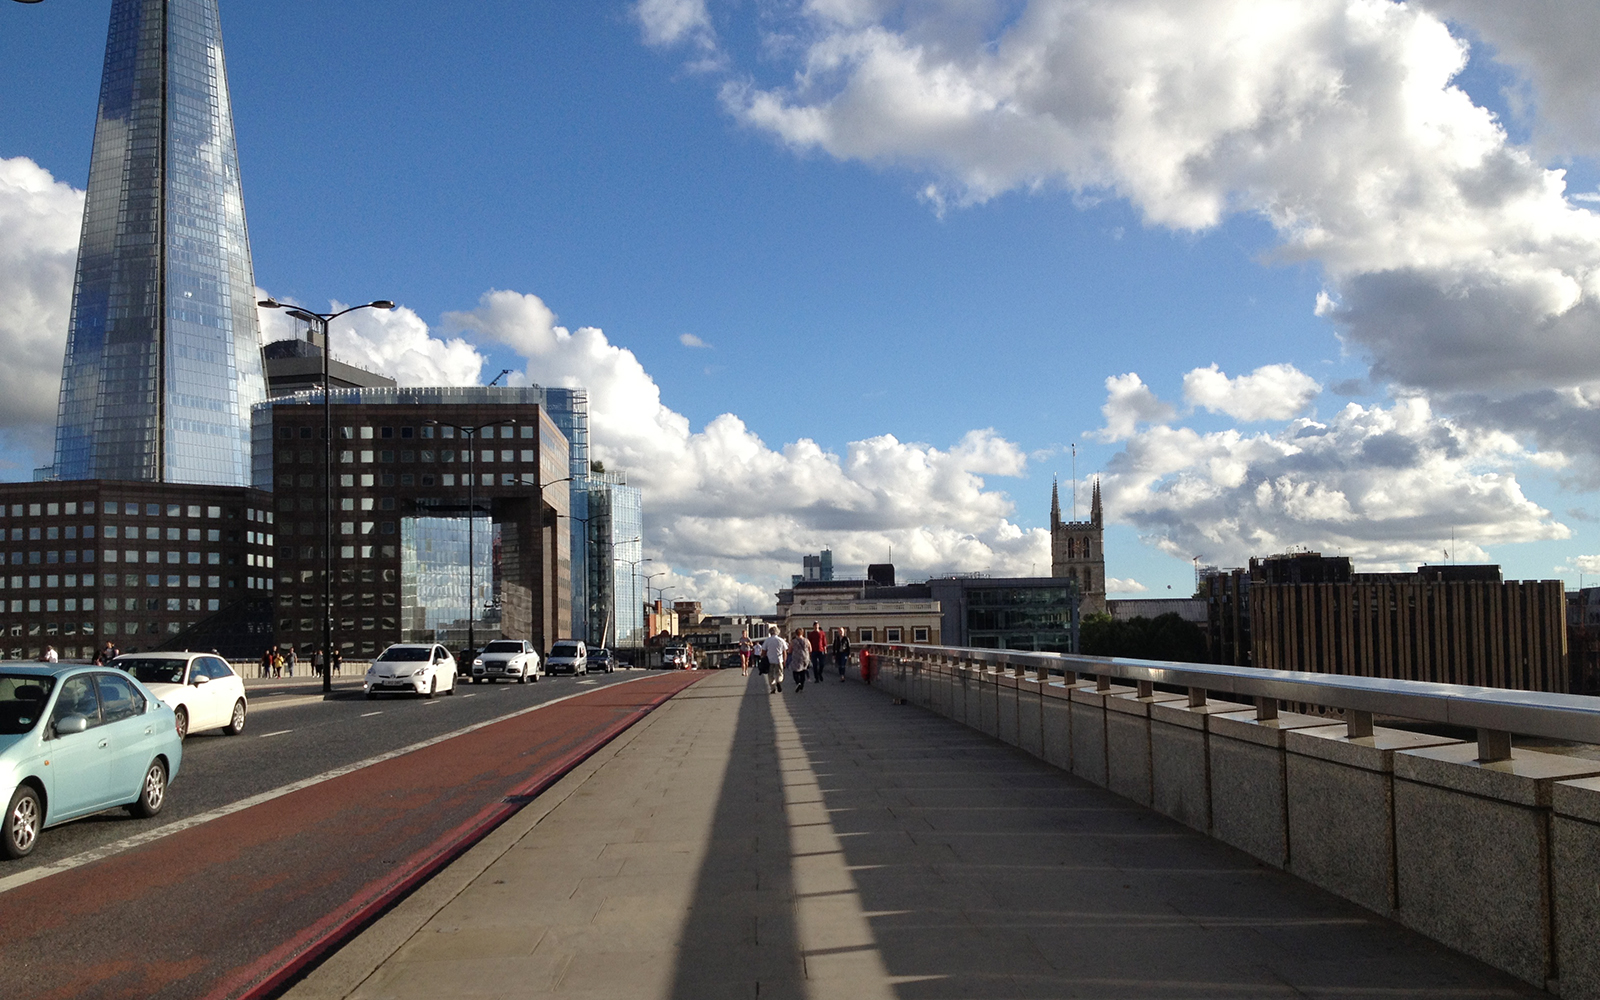 London Bridge 23 August 2015